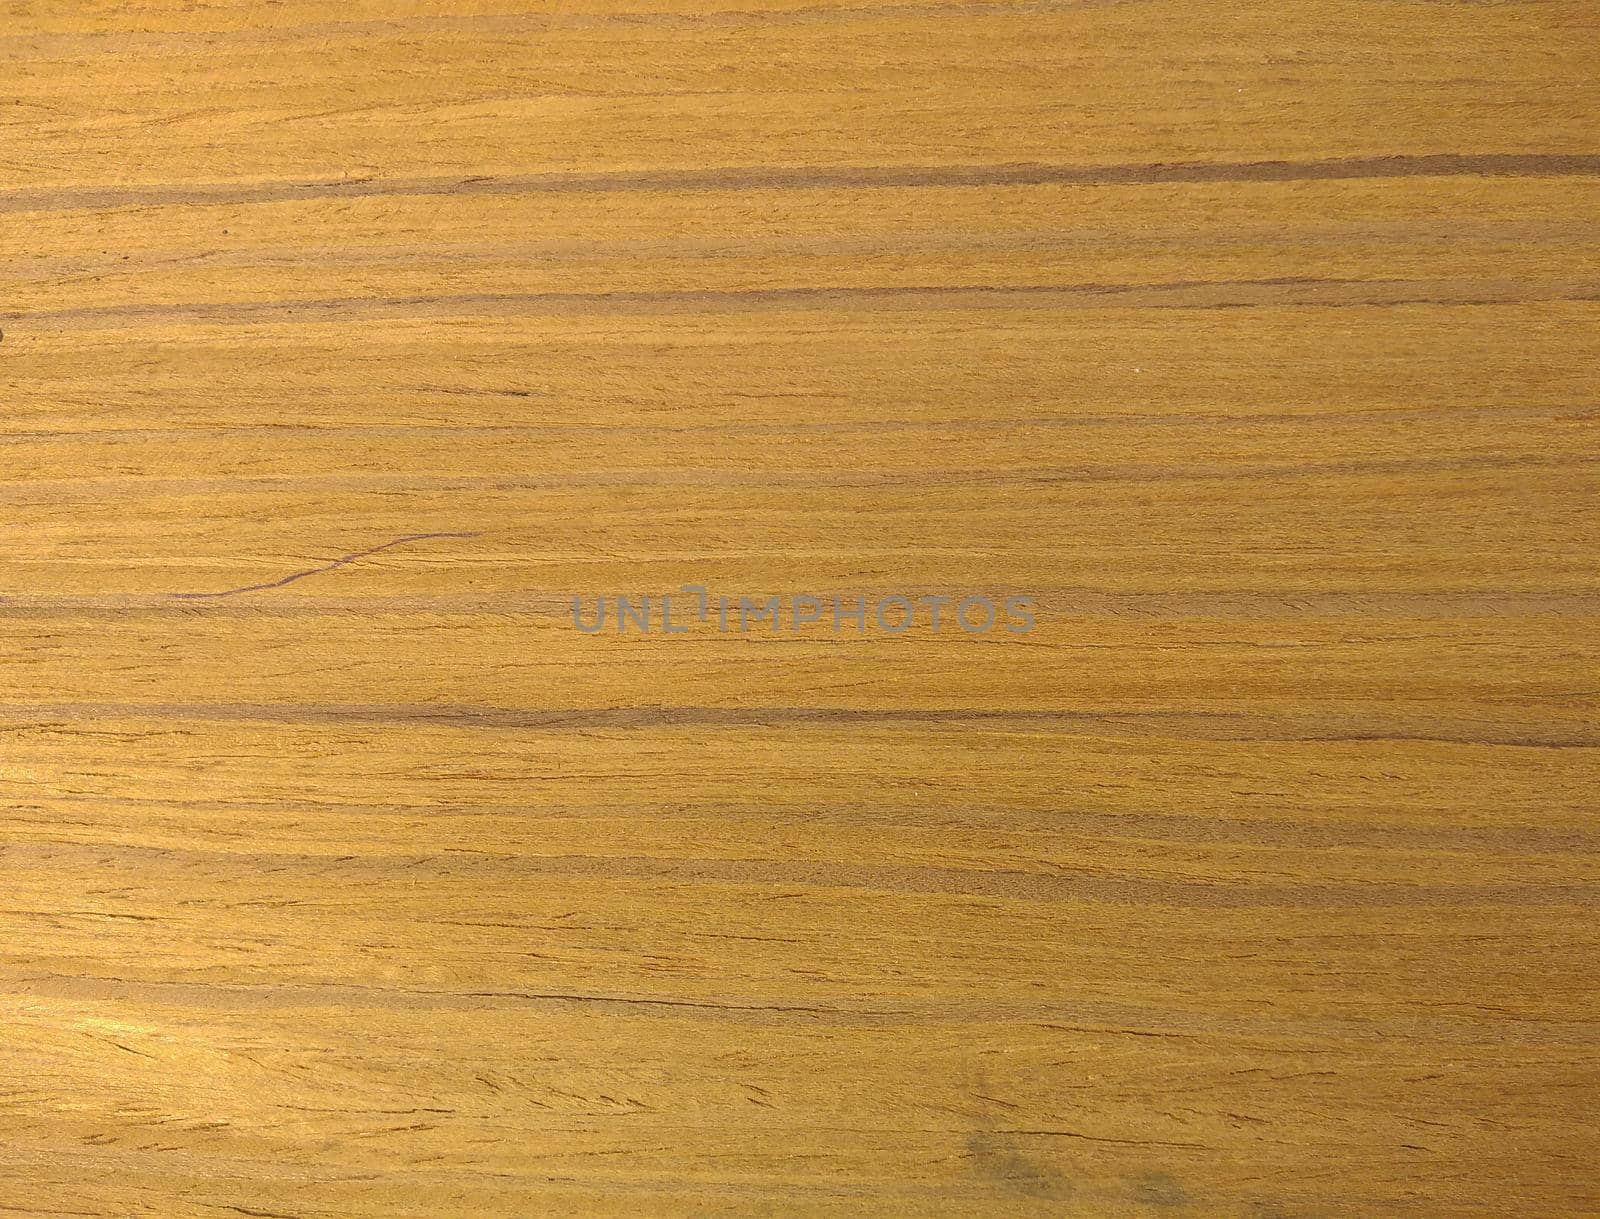 Natural Dark burma teak wood veneer close up image. natural textured slices of wood.